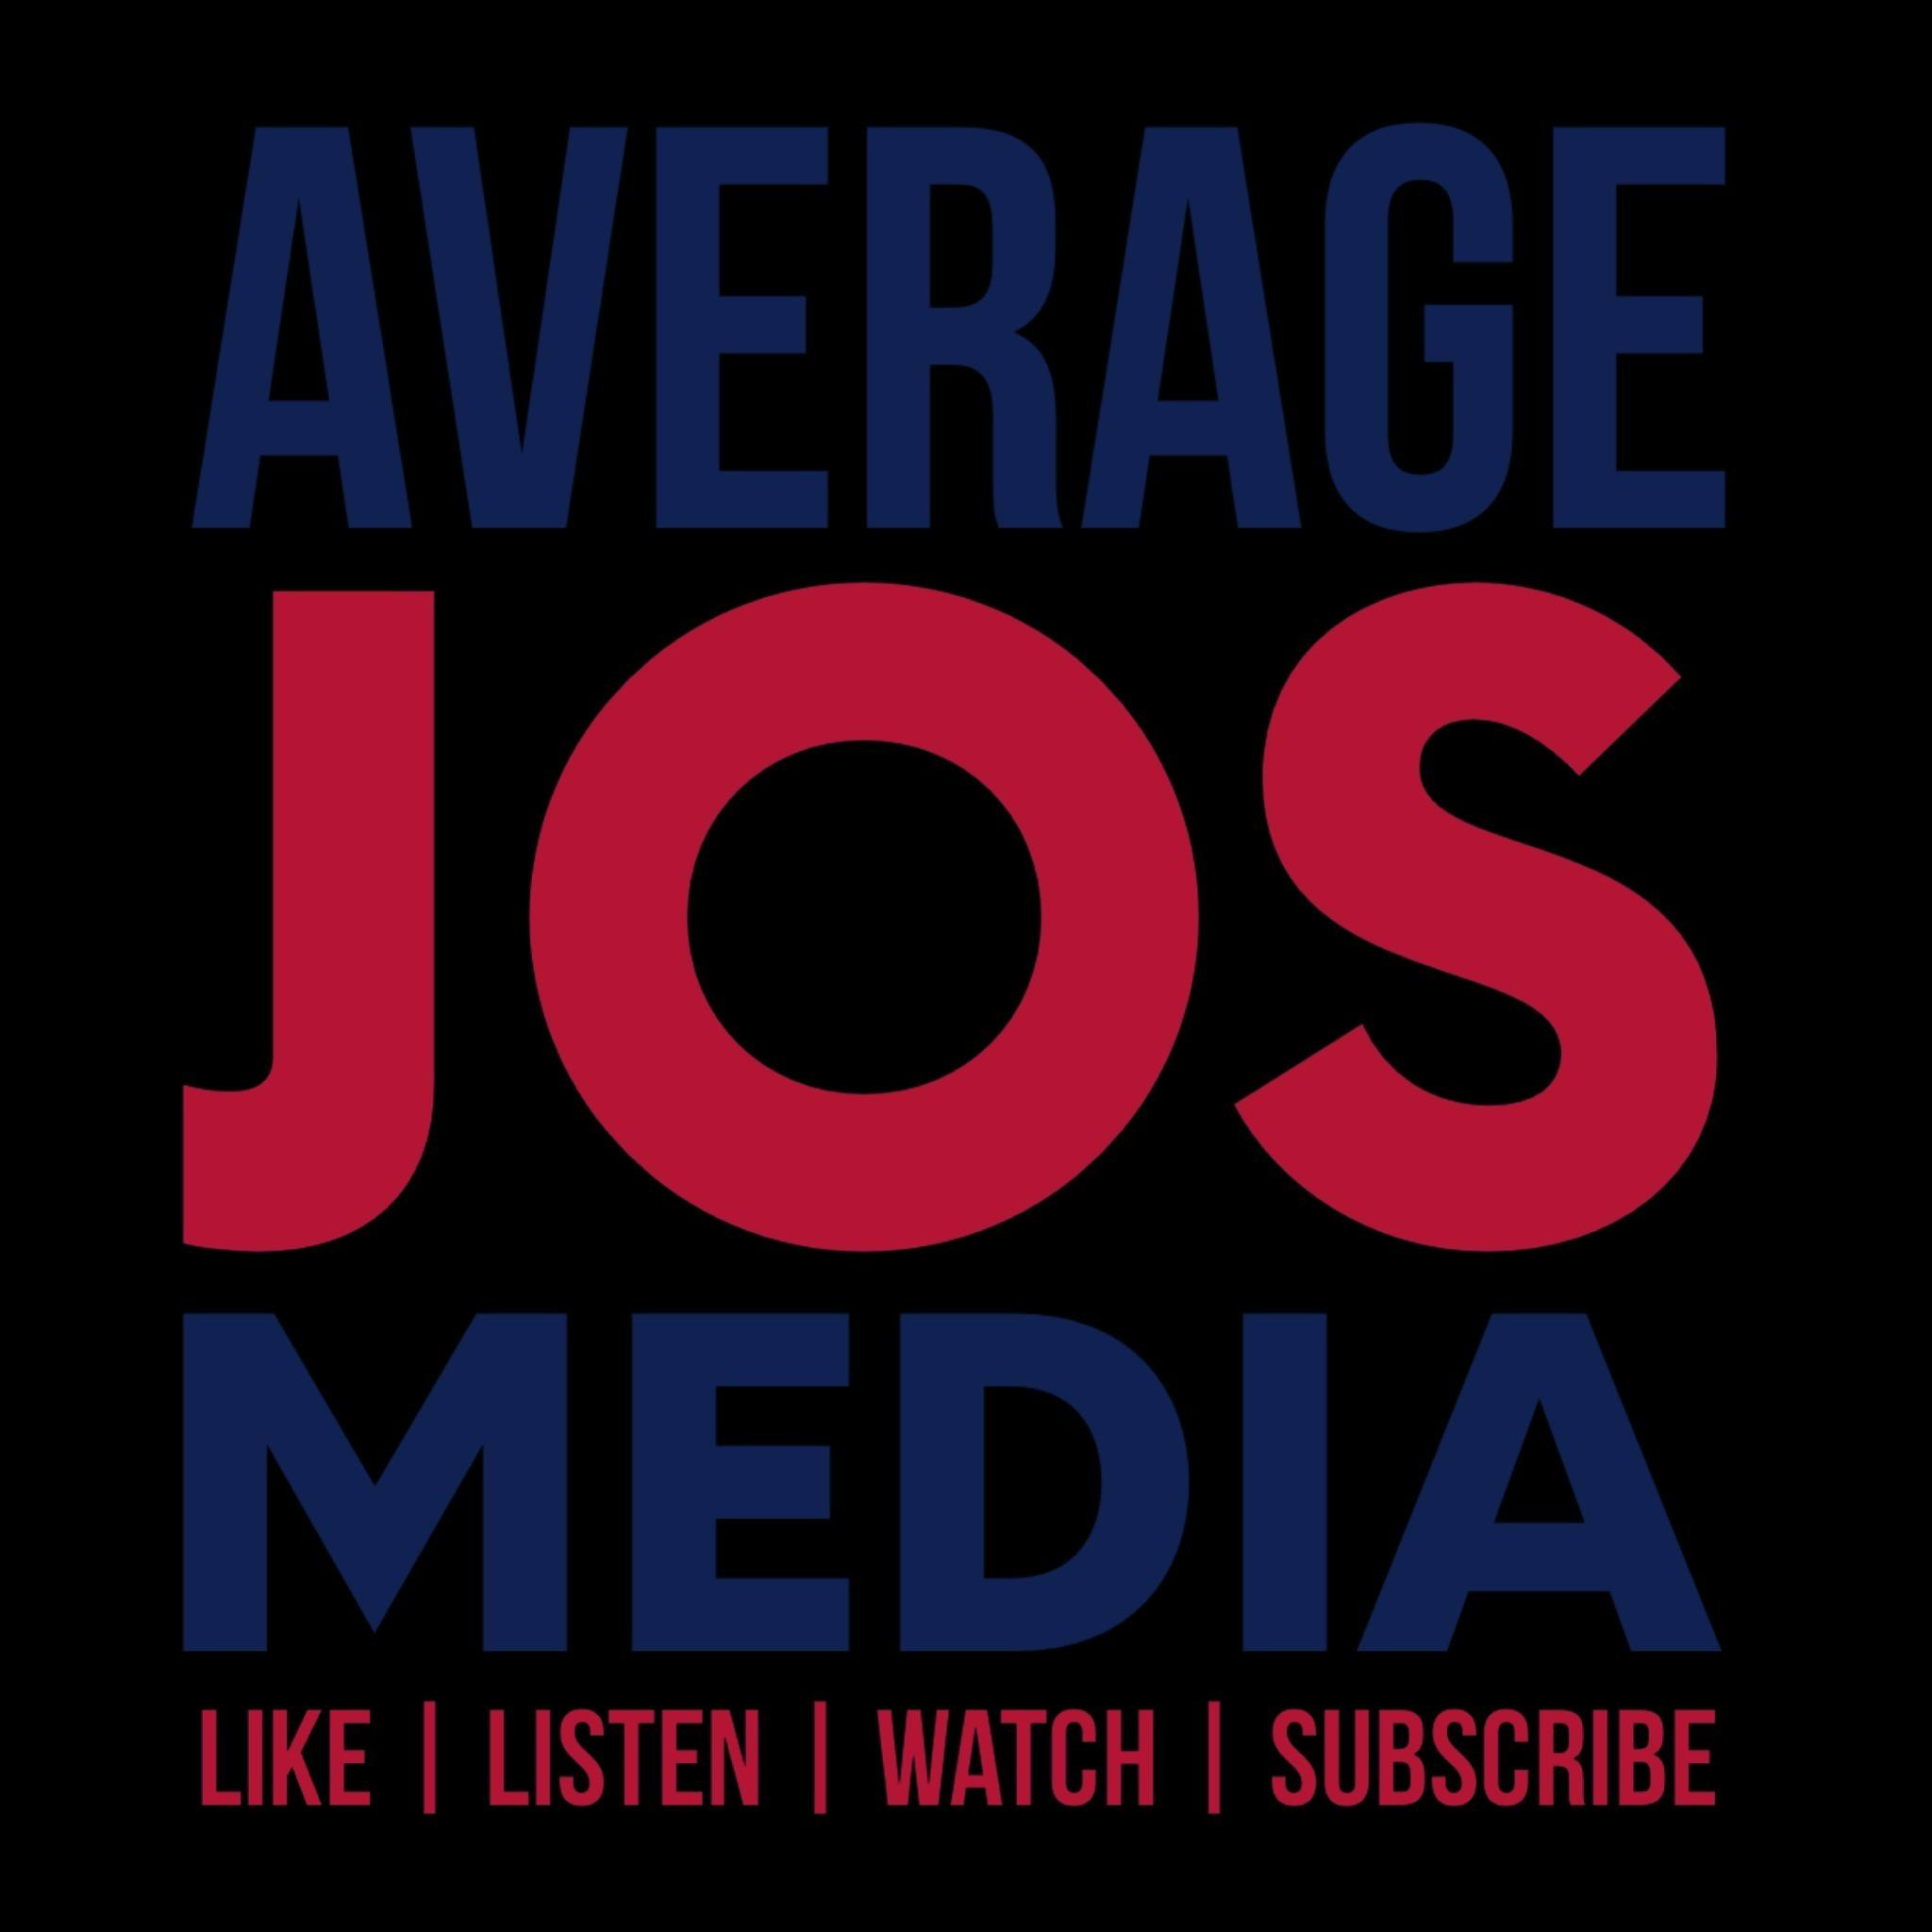 Average Jos Media